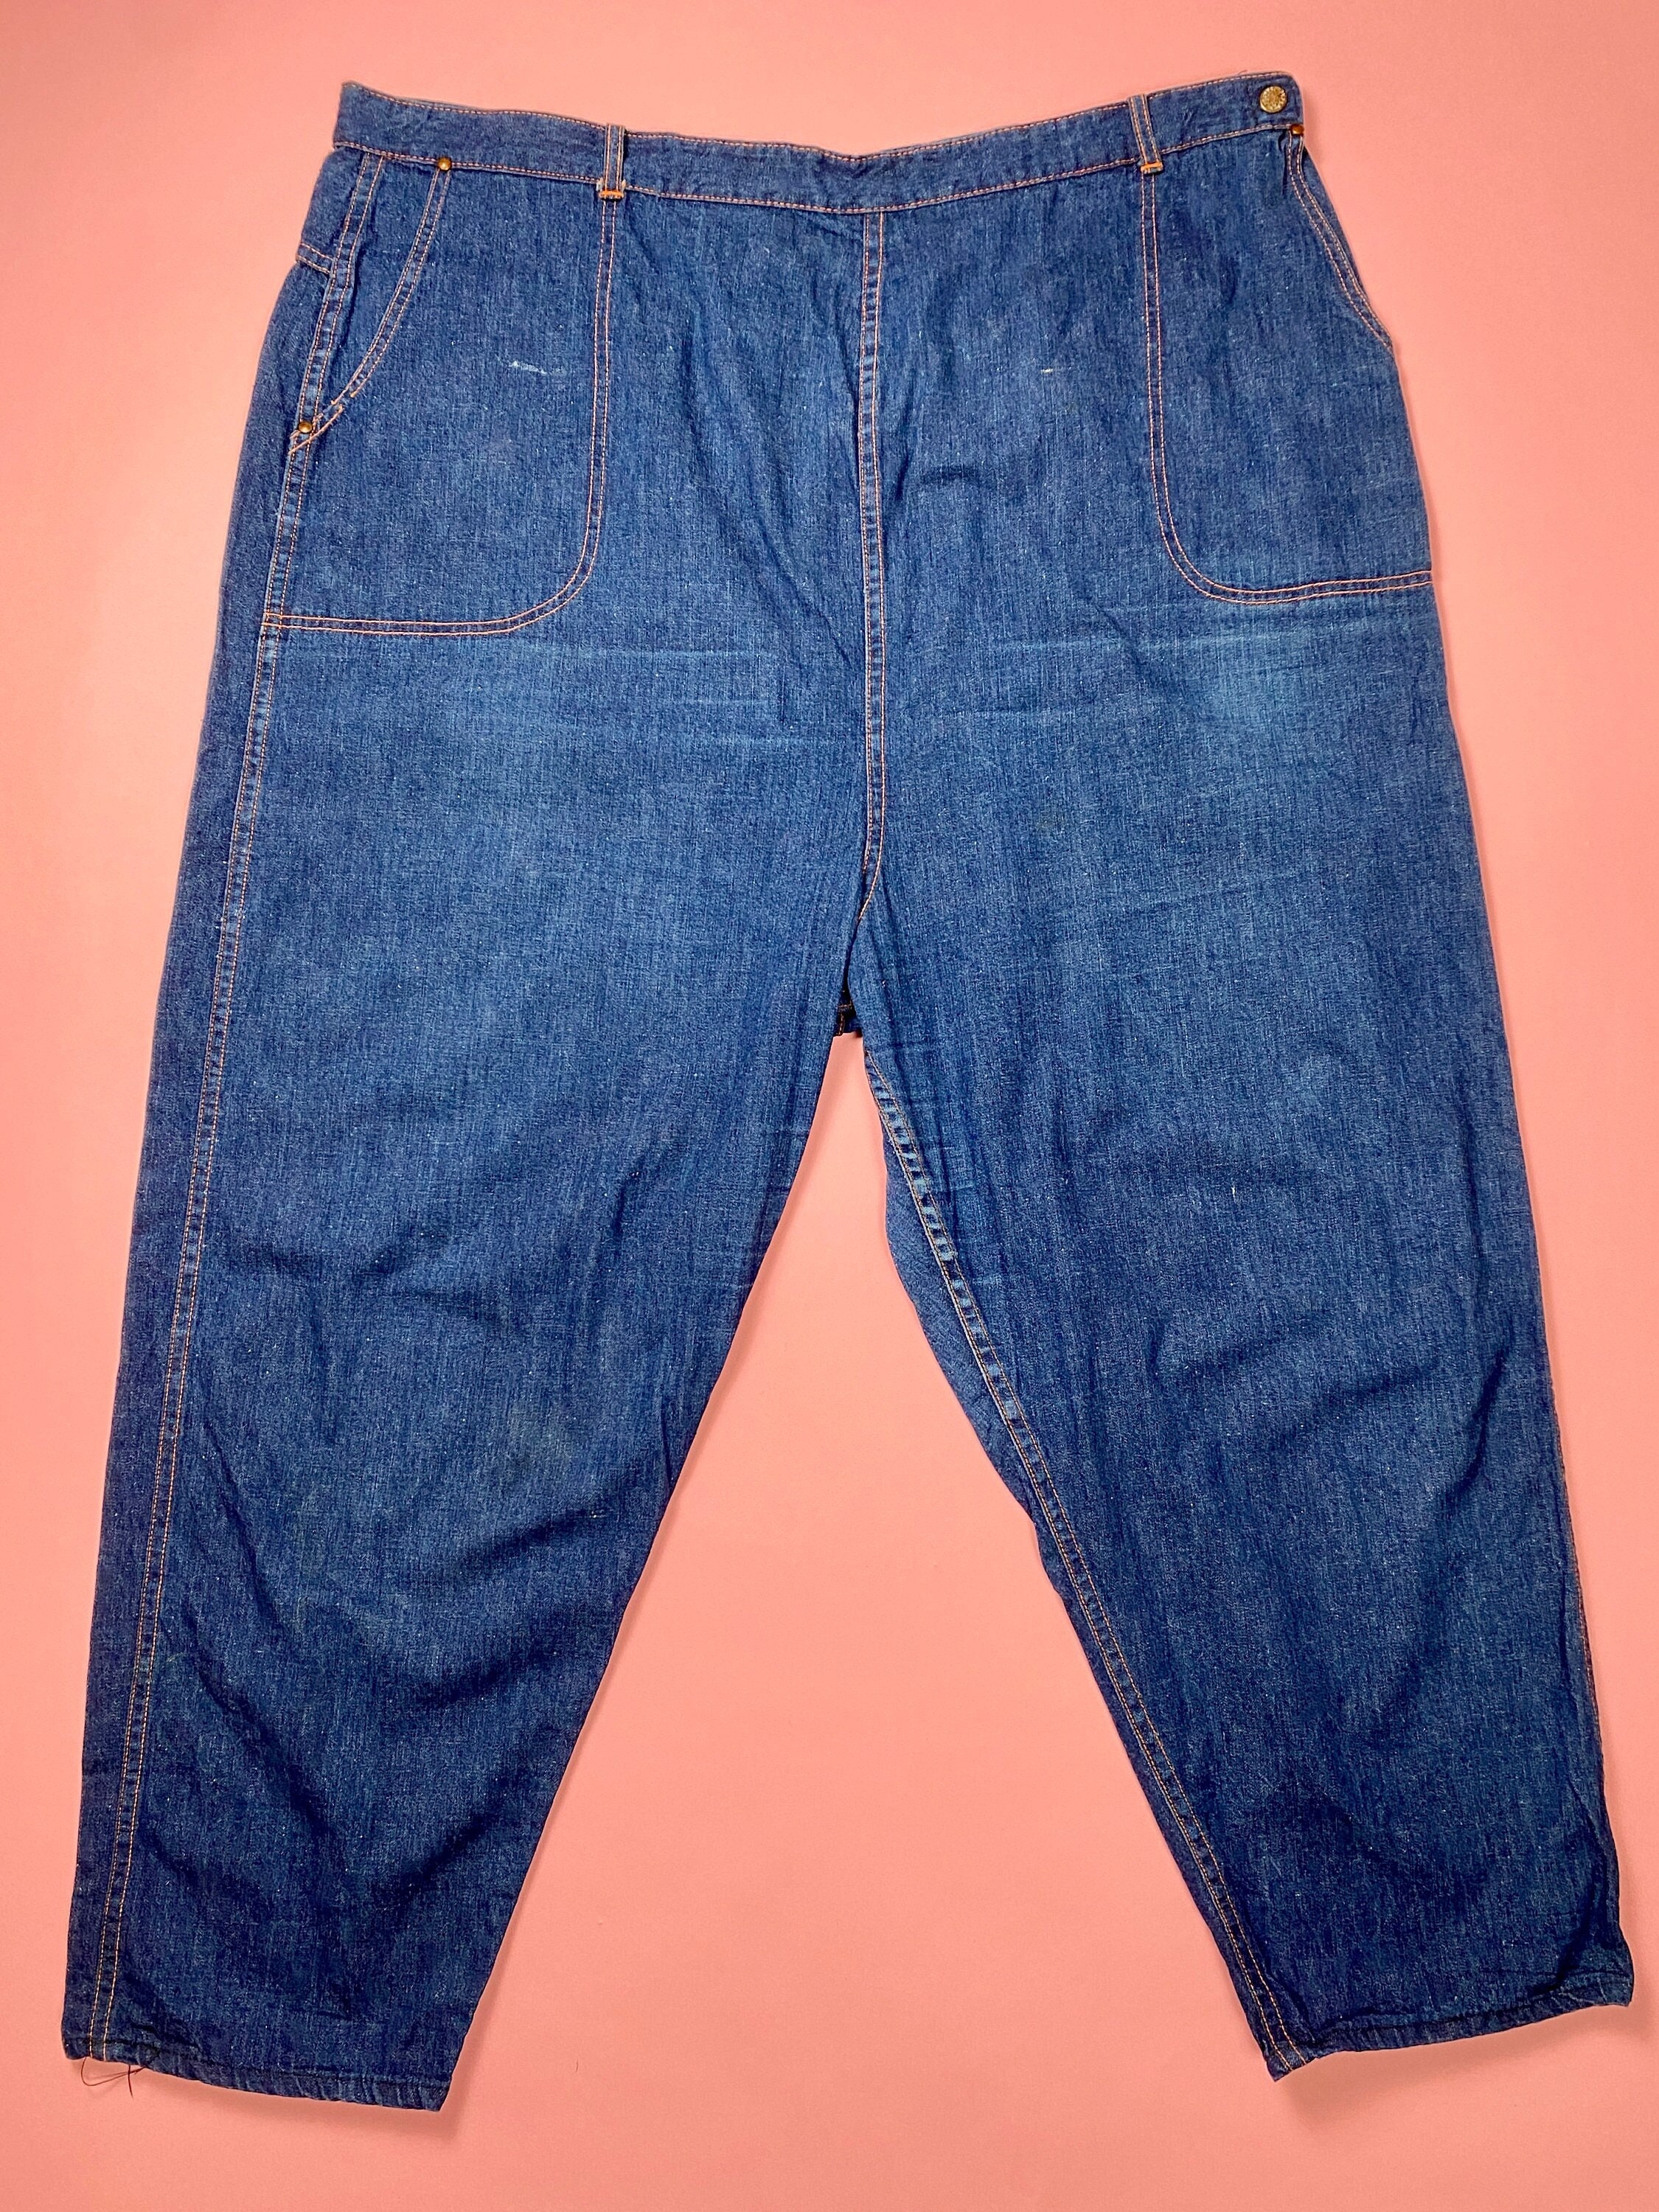 Amazon.com: LEWGEL Women's Jeans Pocket Side Zipper Fly Jeans Jeans (Size :  Small) : Clothing, Shoes & Jewelry